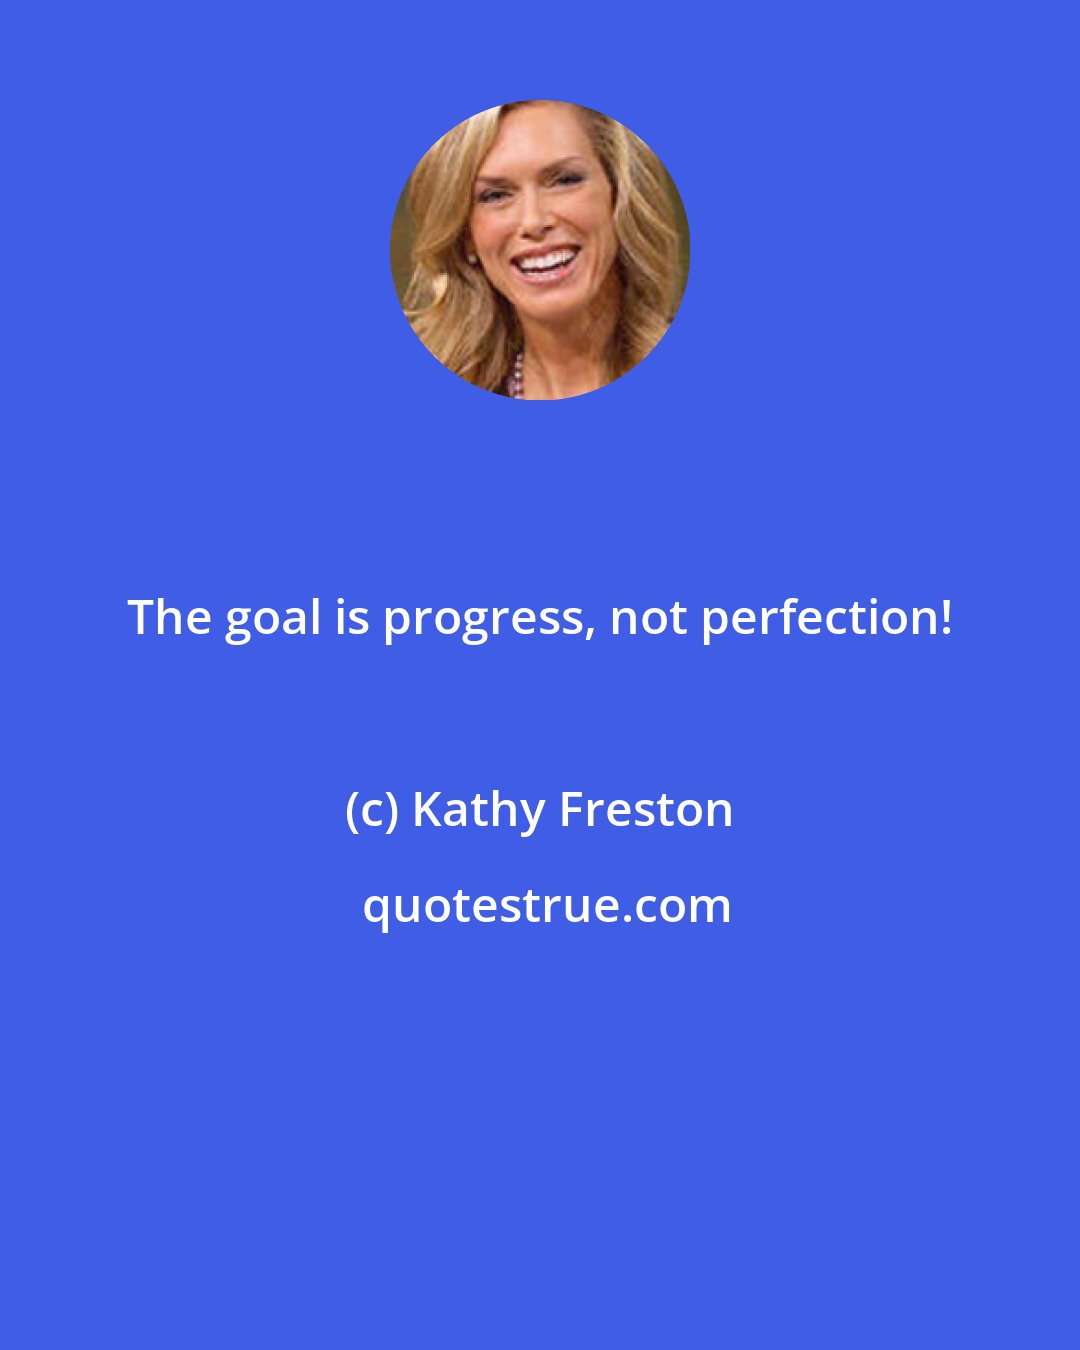 Kathy Freston: The goal is progress, not perfection!